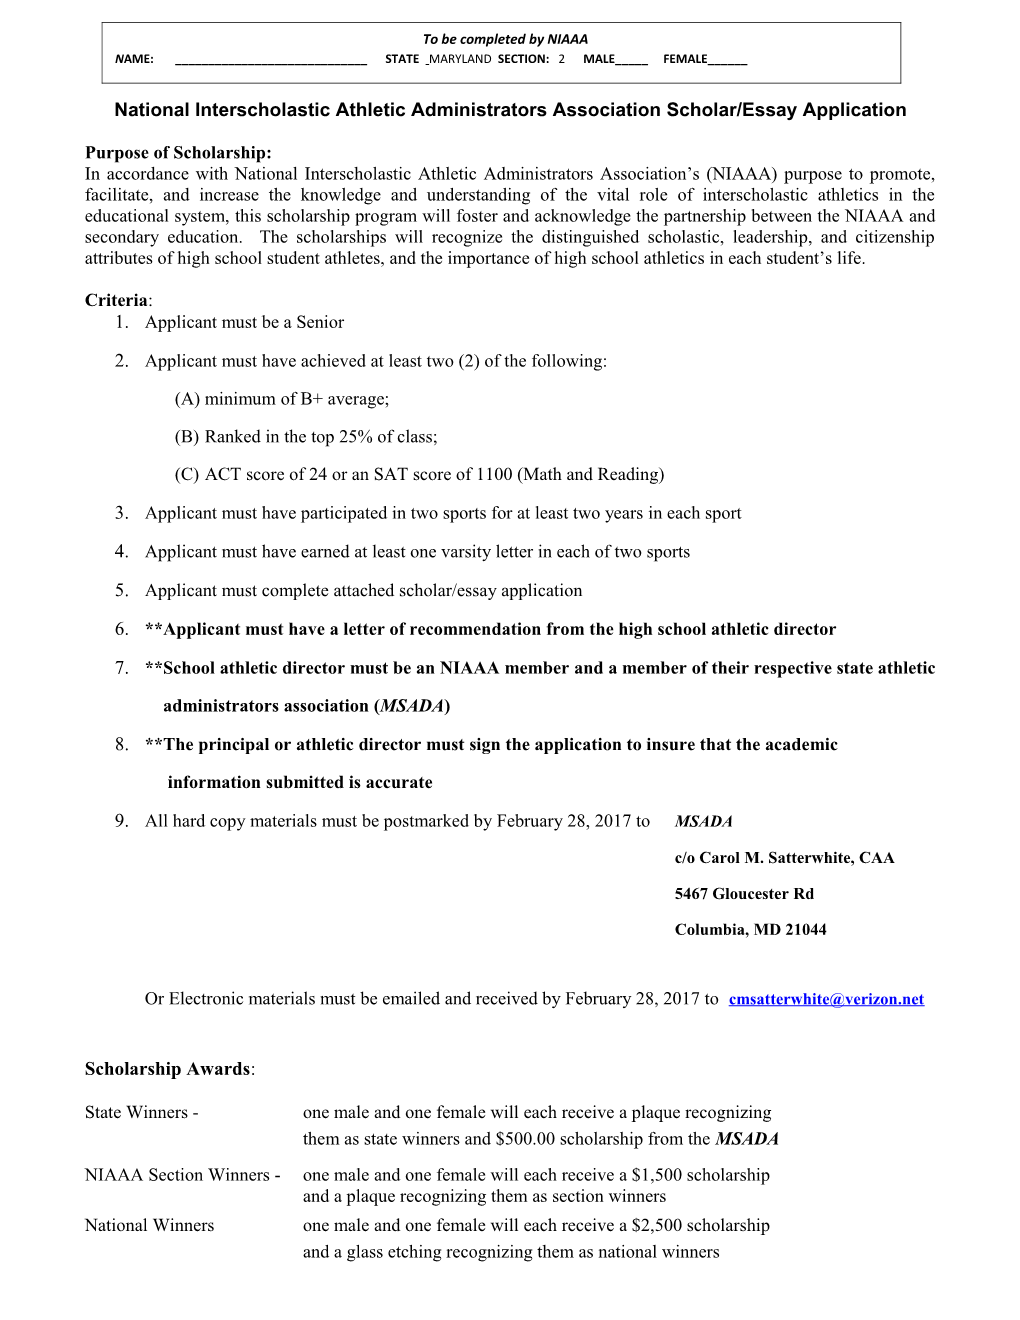 National Interscholastic Athletic Administrators Association Scholar/Essay Application